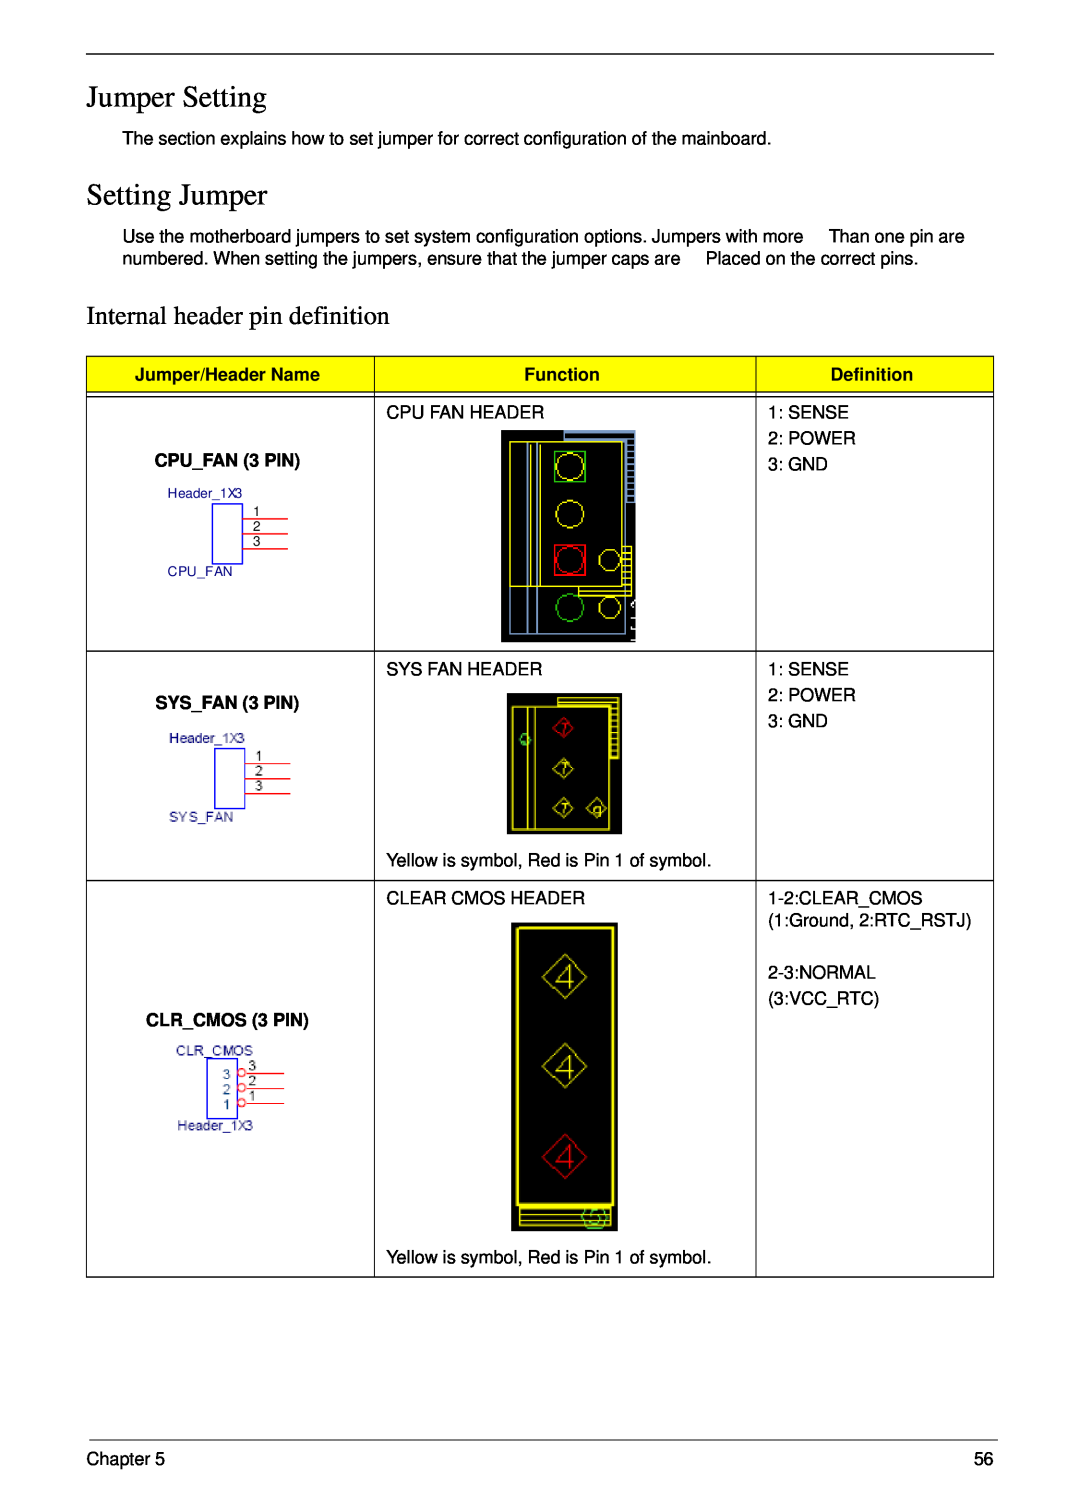 Acer m3400(g) manual Jumper Setting, Setting Jumper, Internal header pin definition 